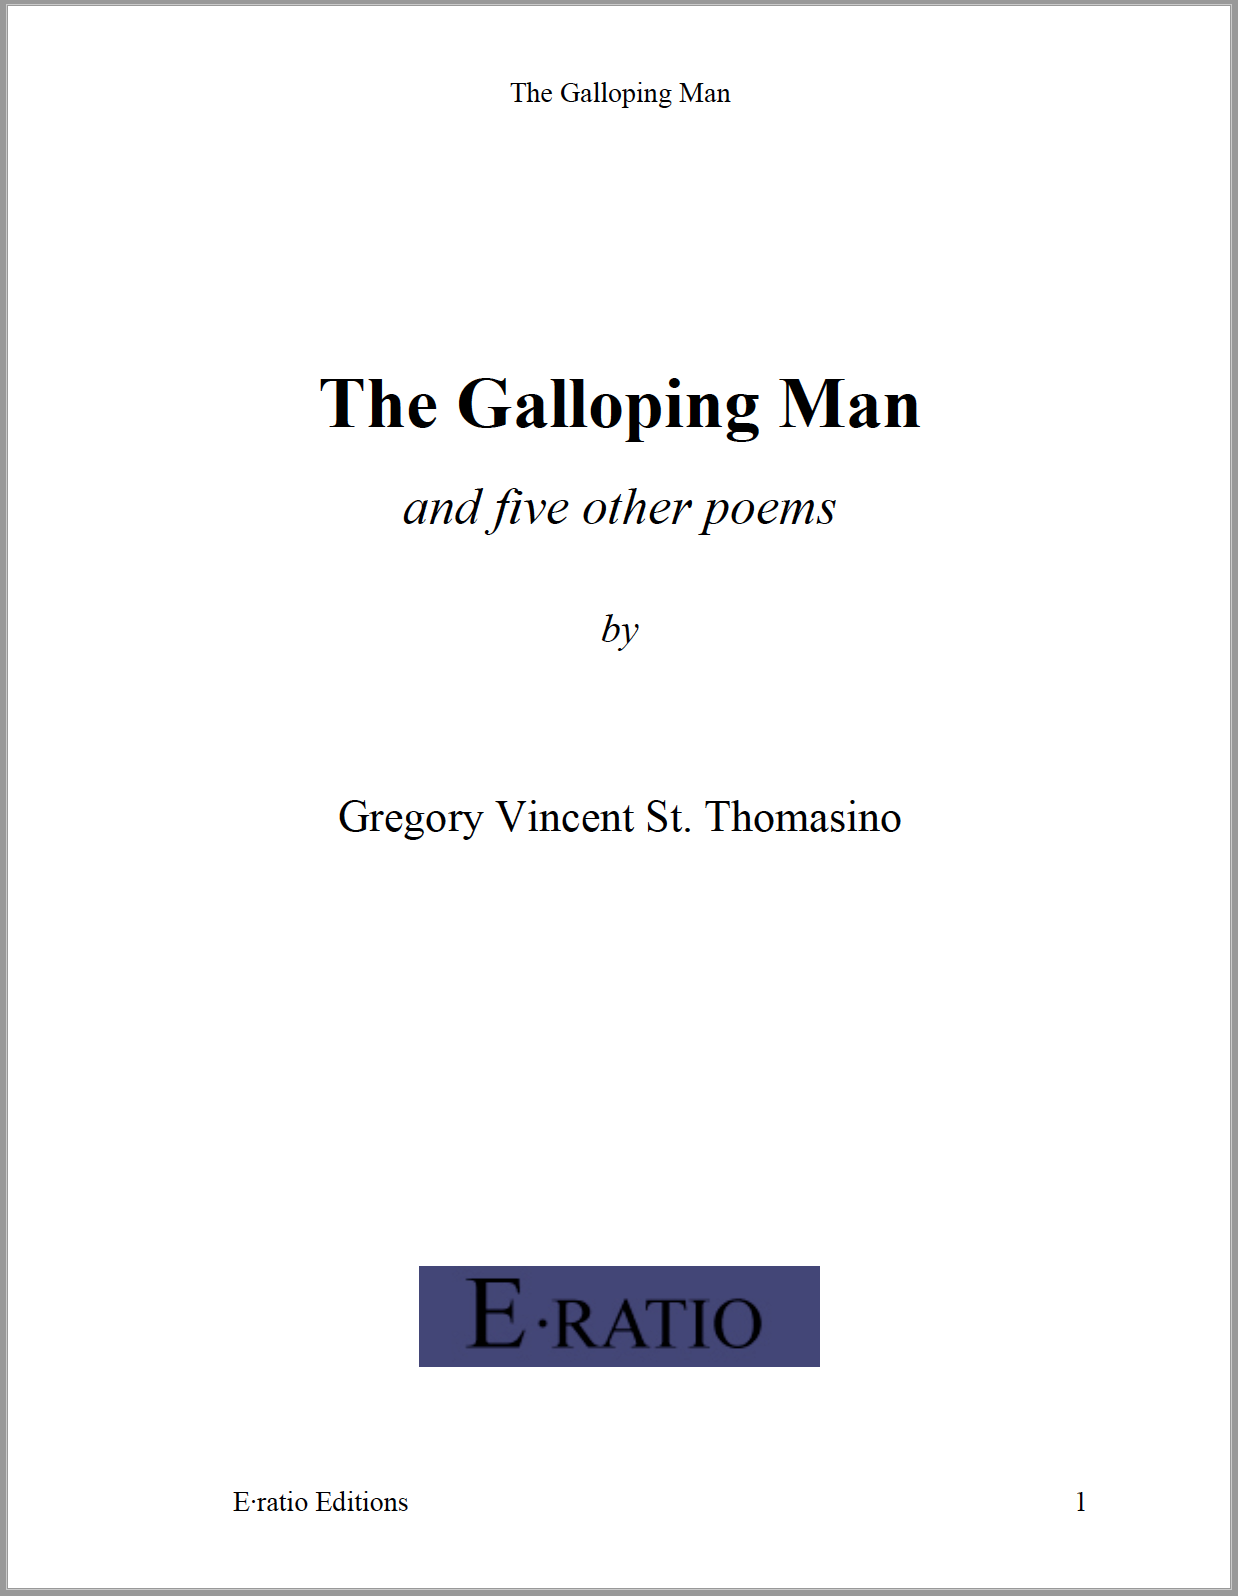 The Galloping Man